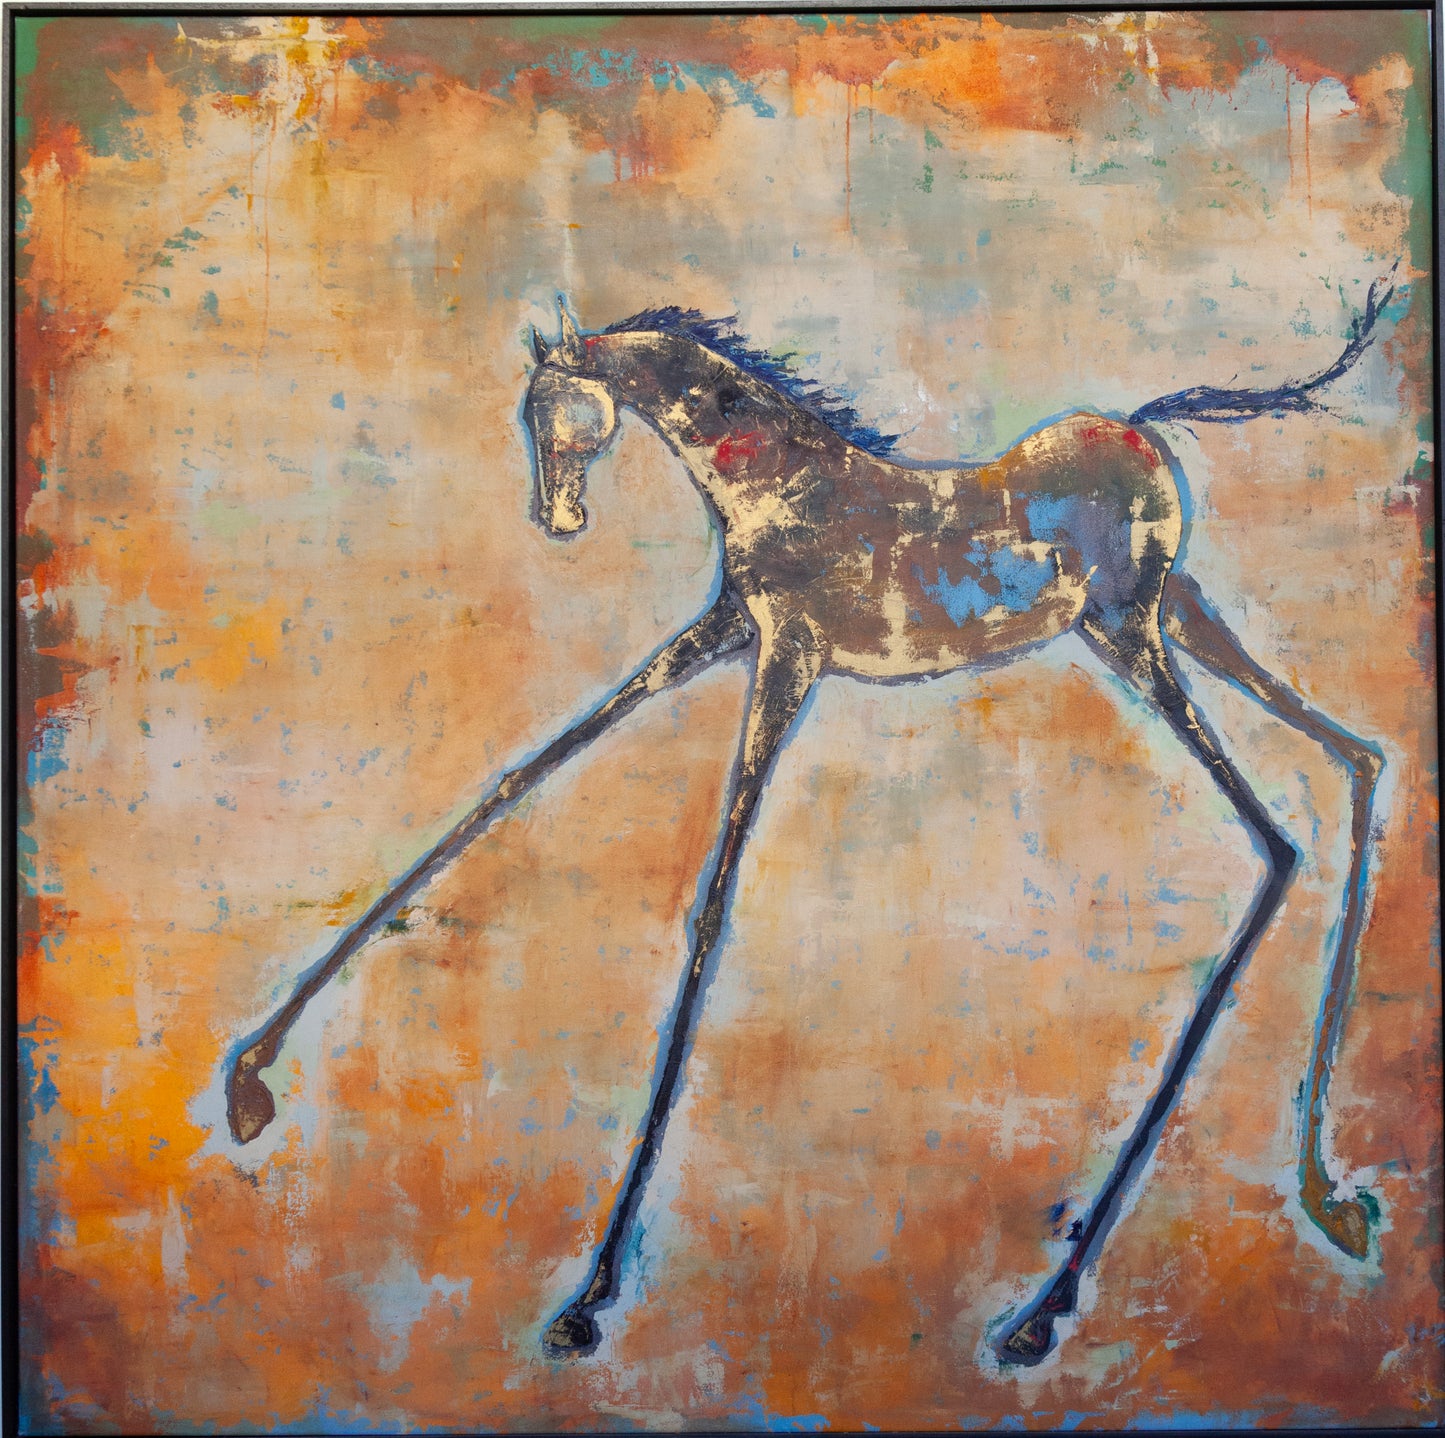 CARA VL'S HANDY HORSE